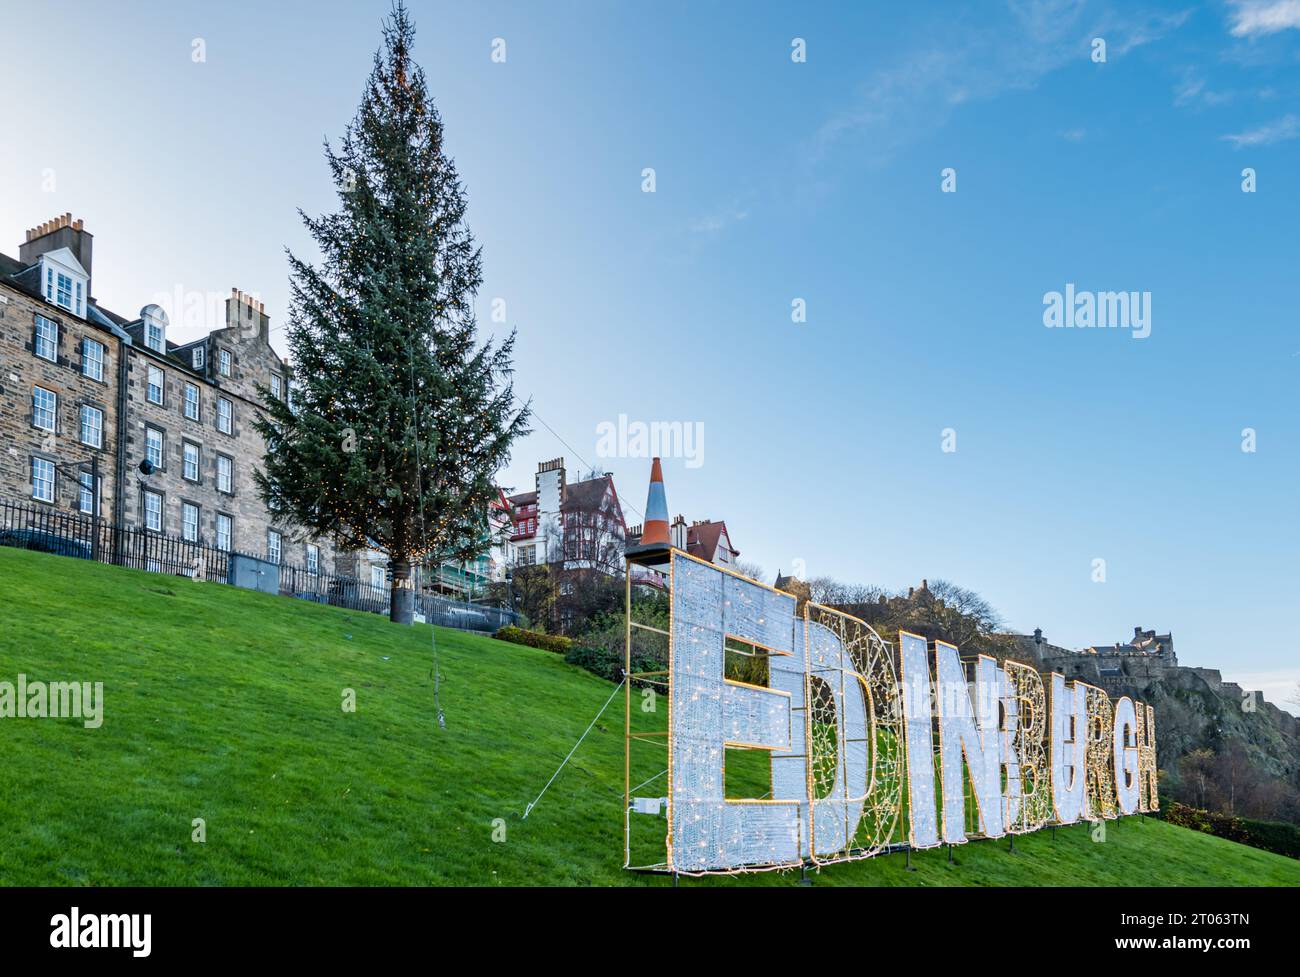 Edinburgh sign on The Mound with Norwegian Christmas tree in Winter, Scotland, UK Stock Photo